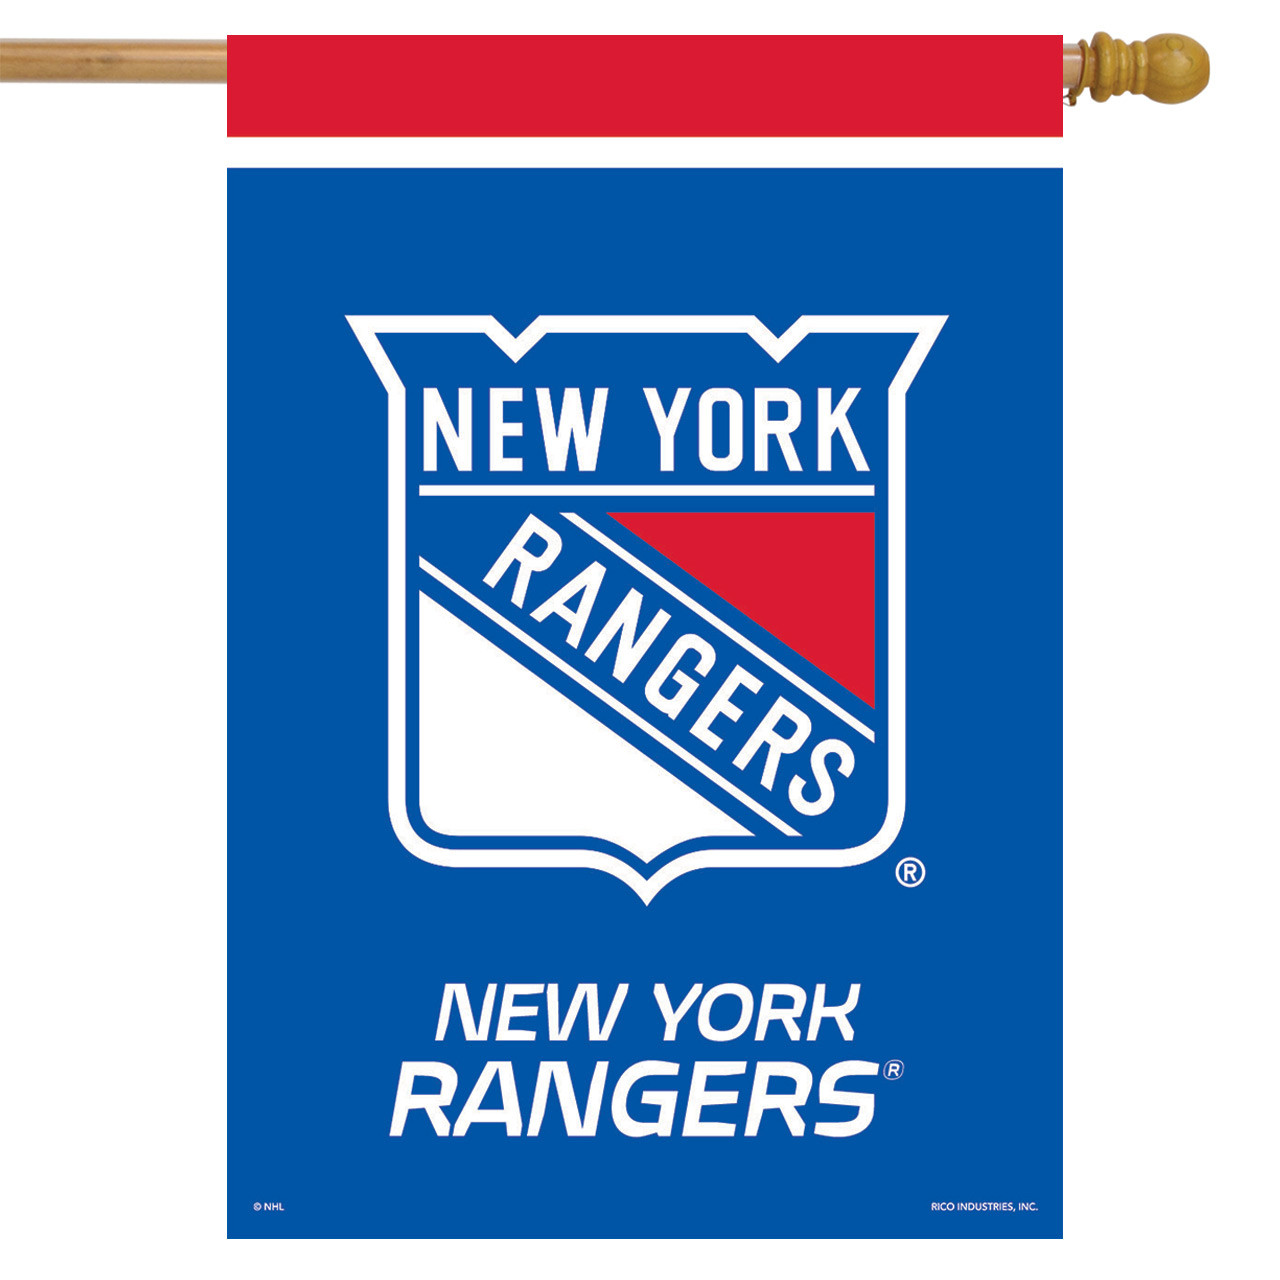 New York Rangers Home & Office Goods, Rangers Home Goods, Flags